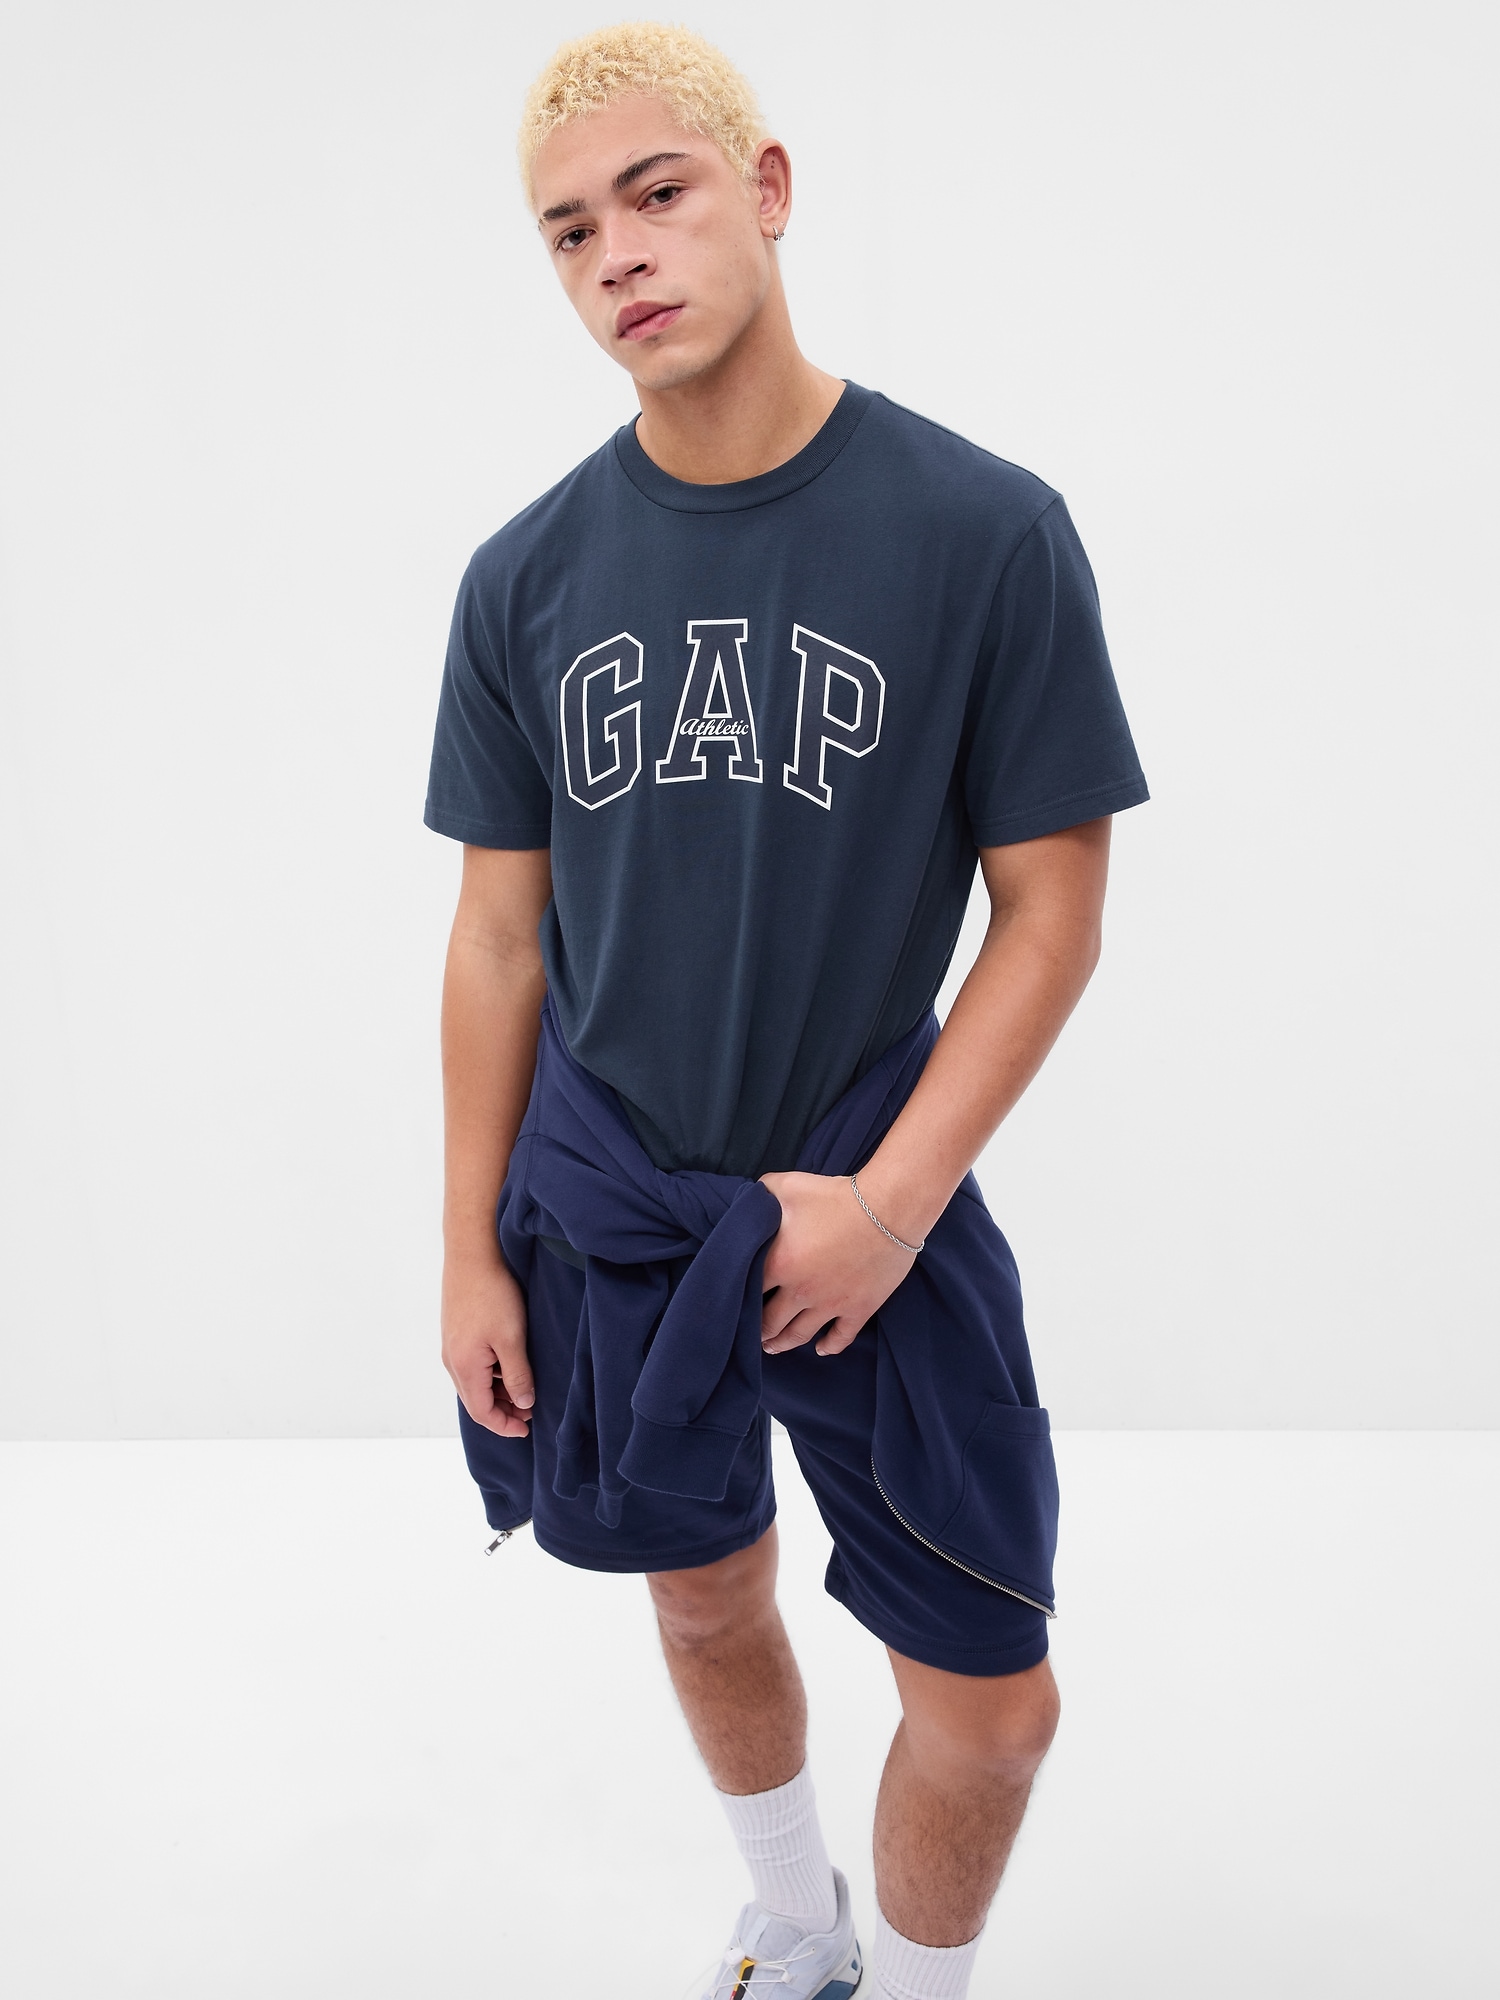 Gap Arch Logo T-Shirt | Gap